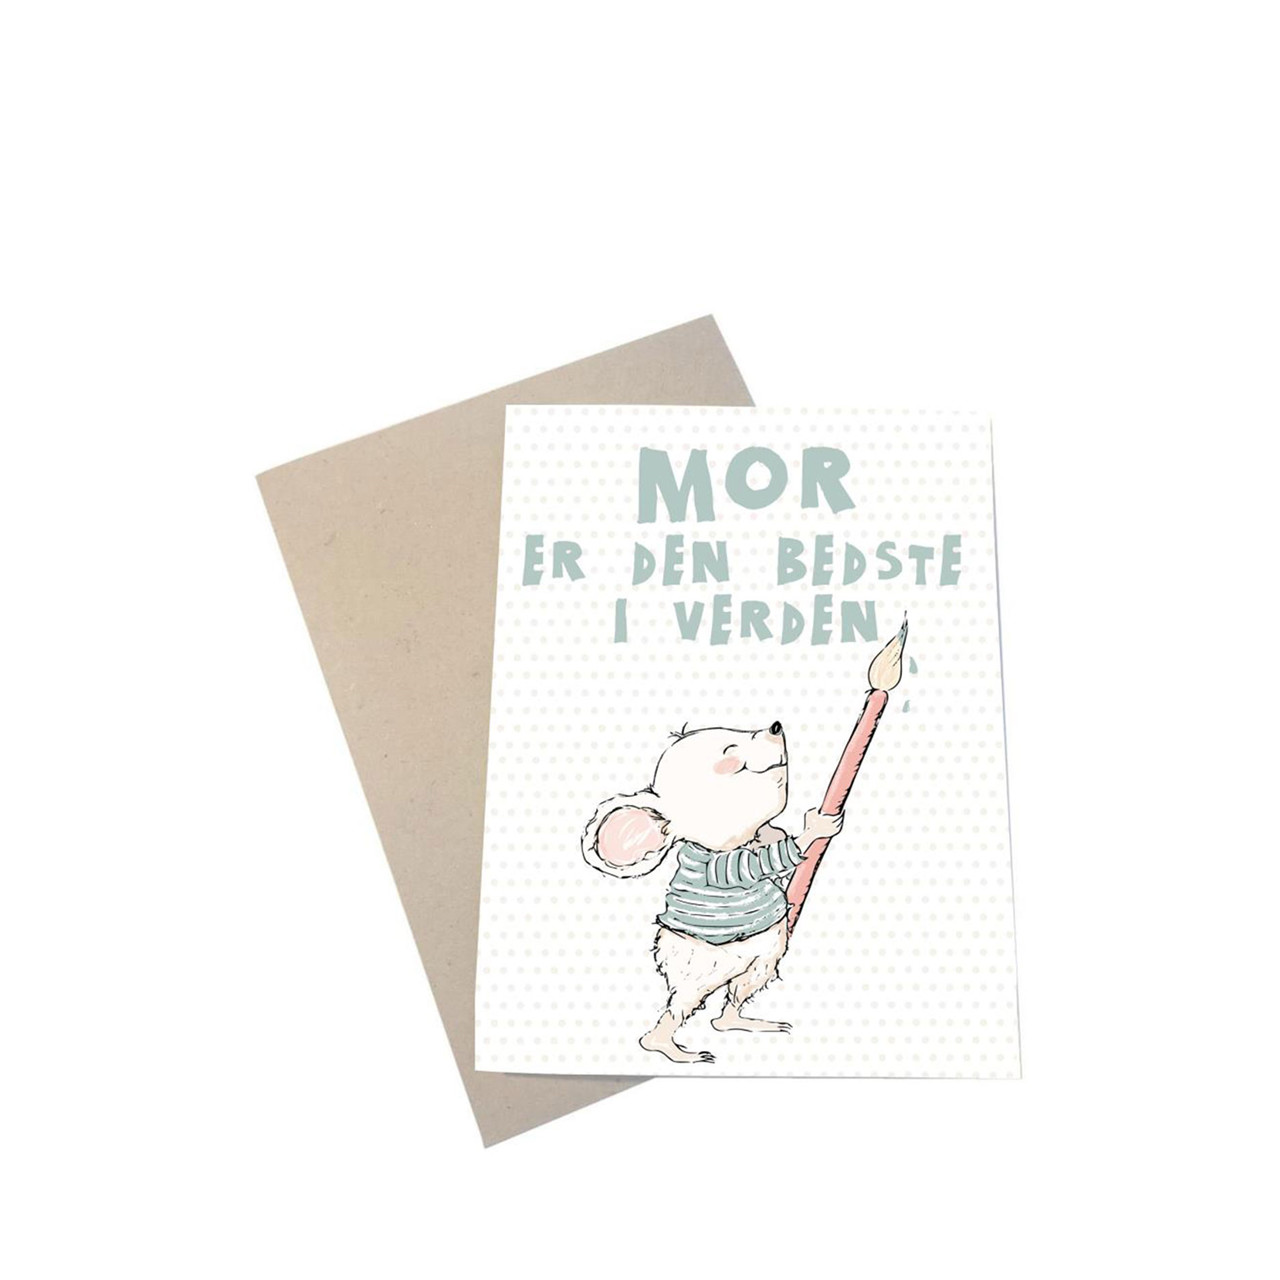 MOUSE AND PEN “Mor er den bedste i verden” kort inkl. kuvert